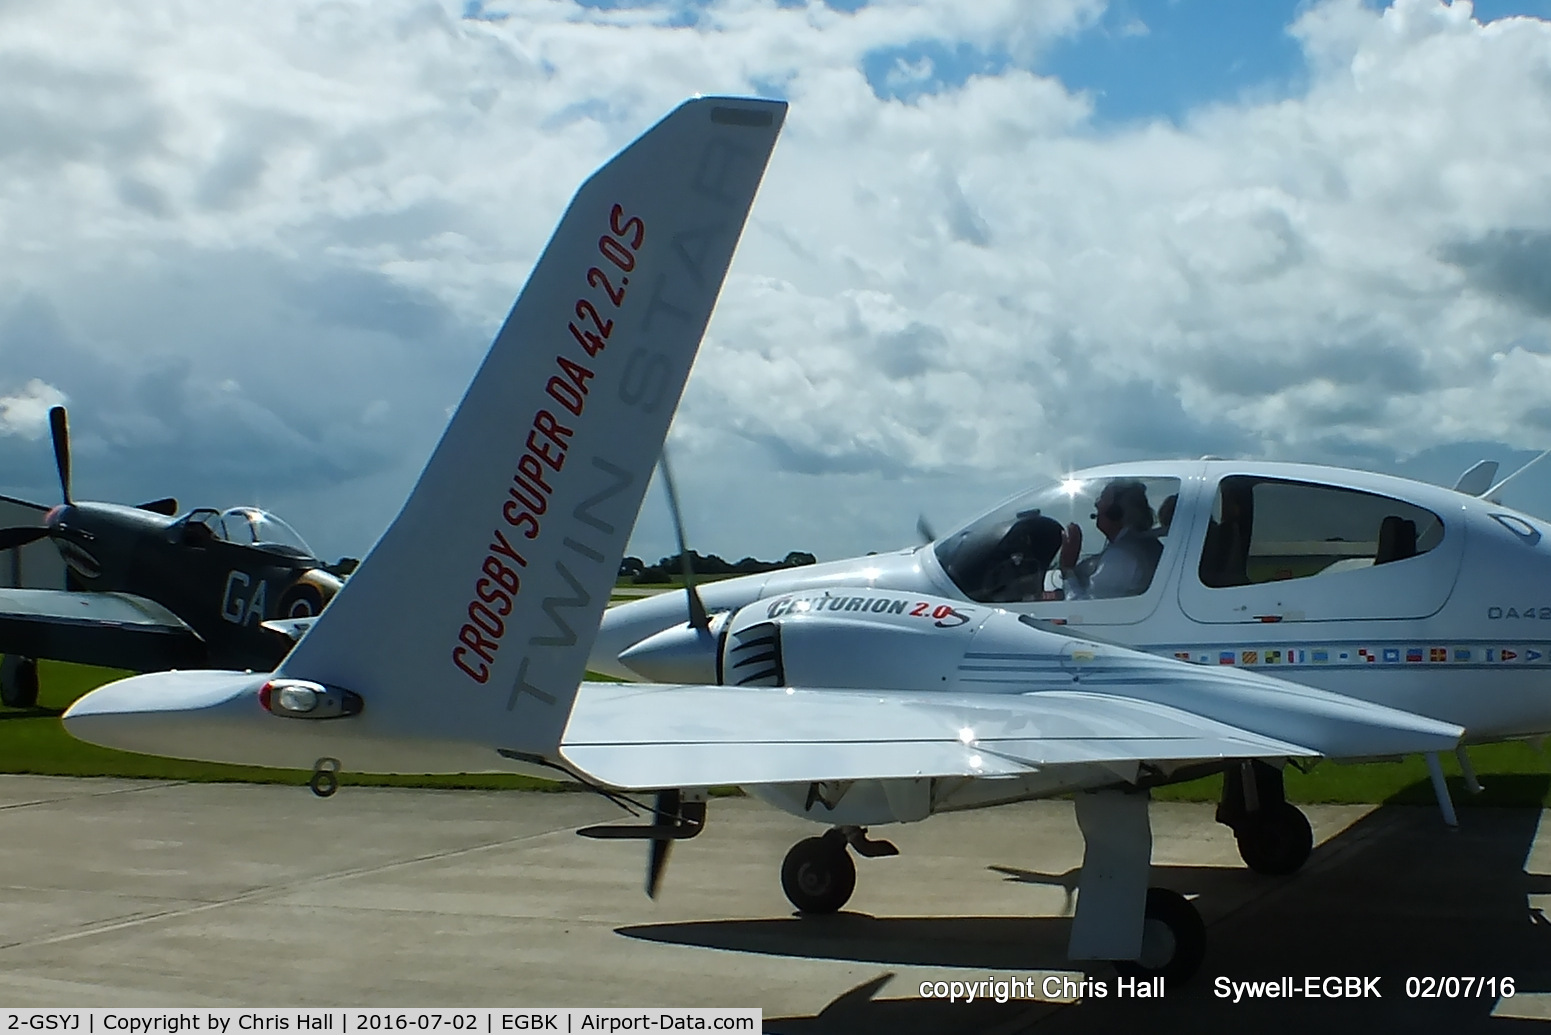 2-GSYJ, 2006 Diamond DA-42 Twin Star C/N 42.135, at Aeroexpo 2016